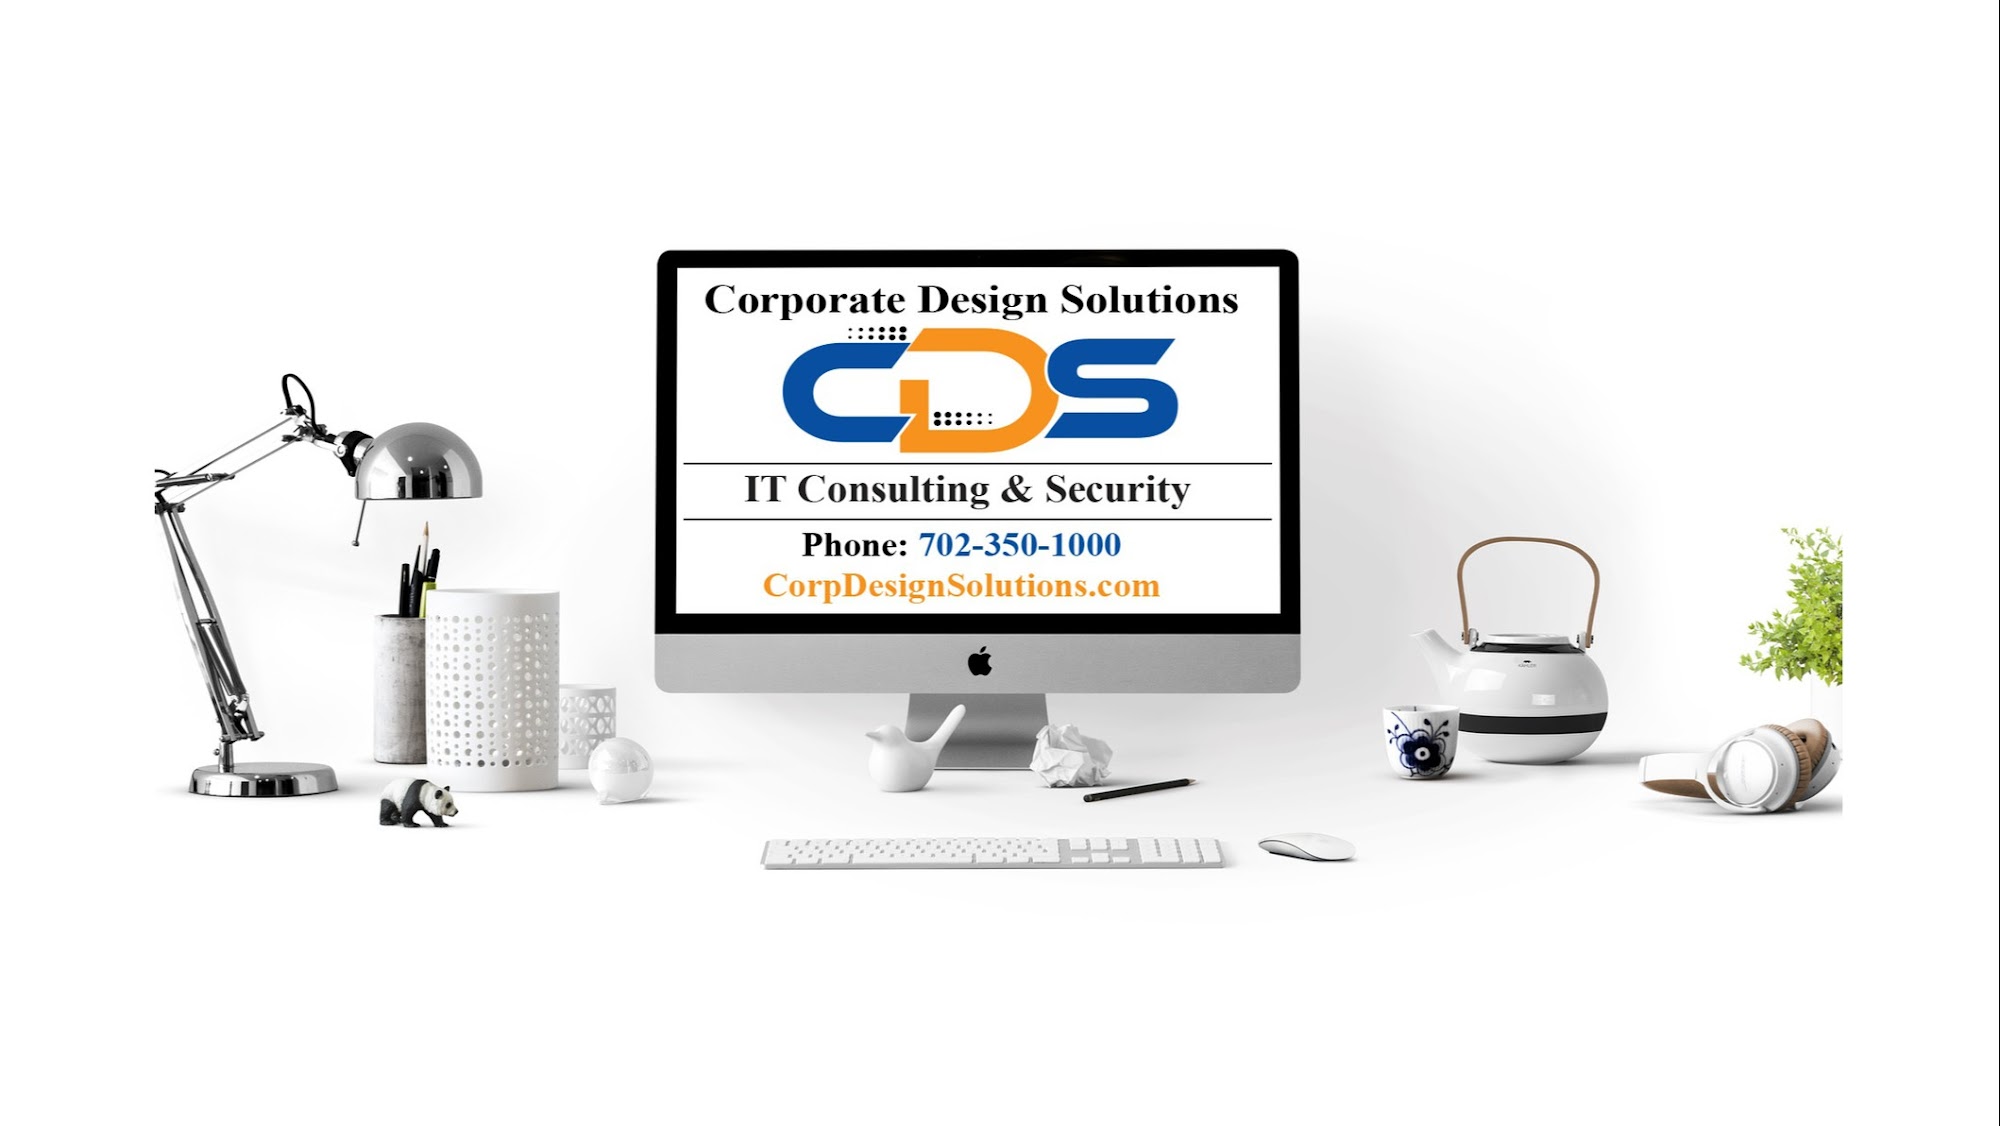 Corporate Design Solutions LLC